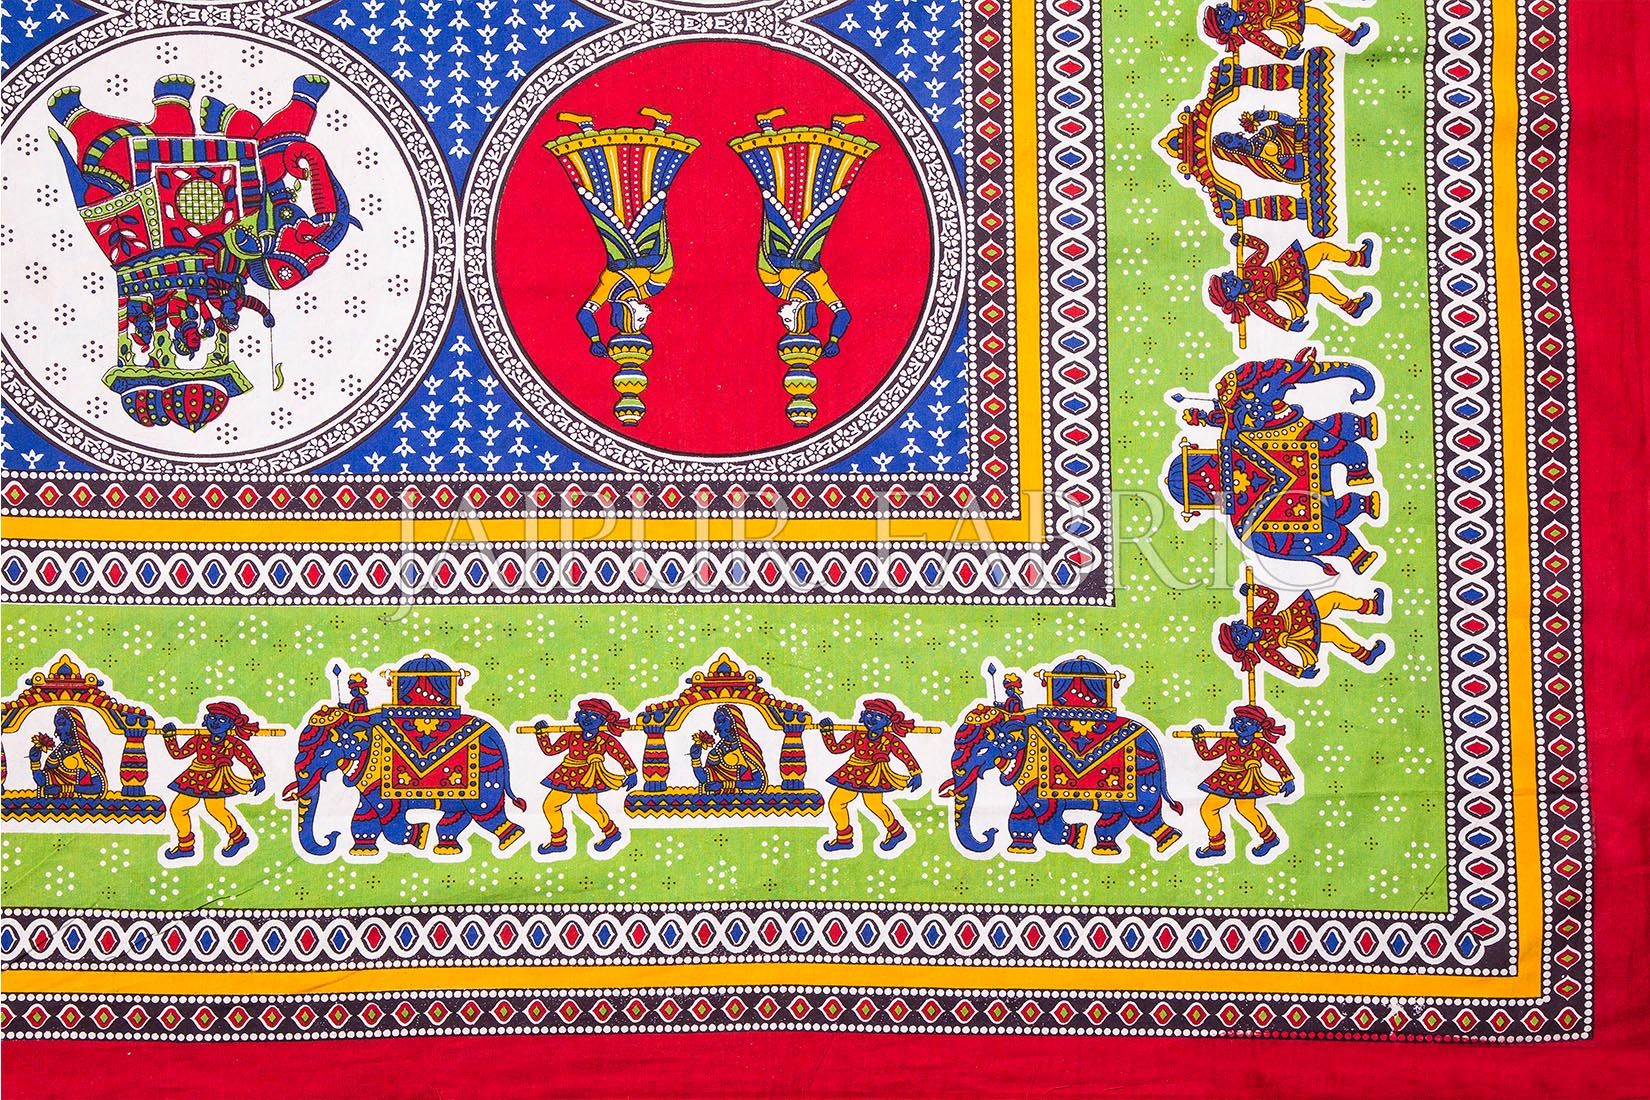 Red Border Jaipri Fat Wedding Print Cotton Double Bed Sheet